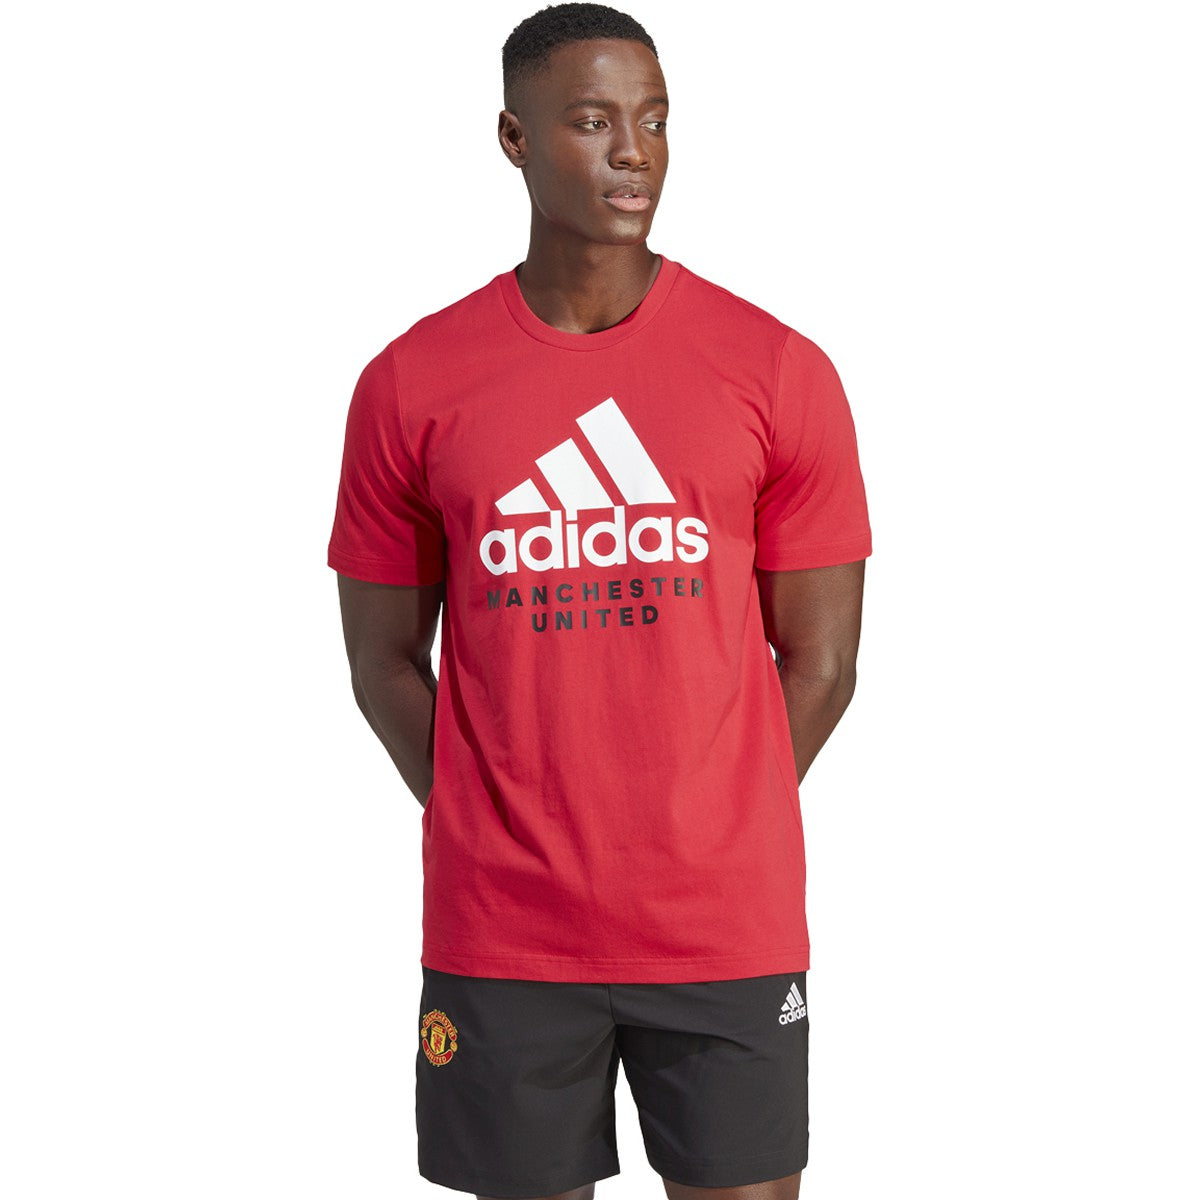 Men's Adidas White Manchester United DNA Logo T-Shirt